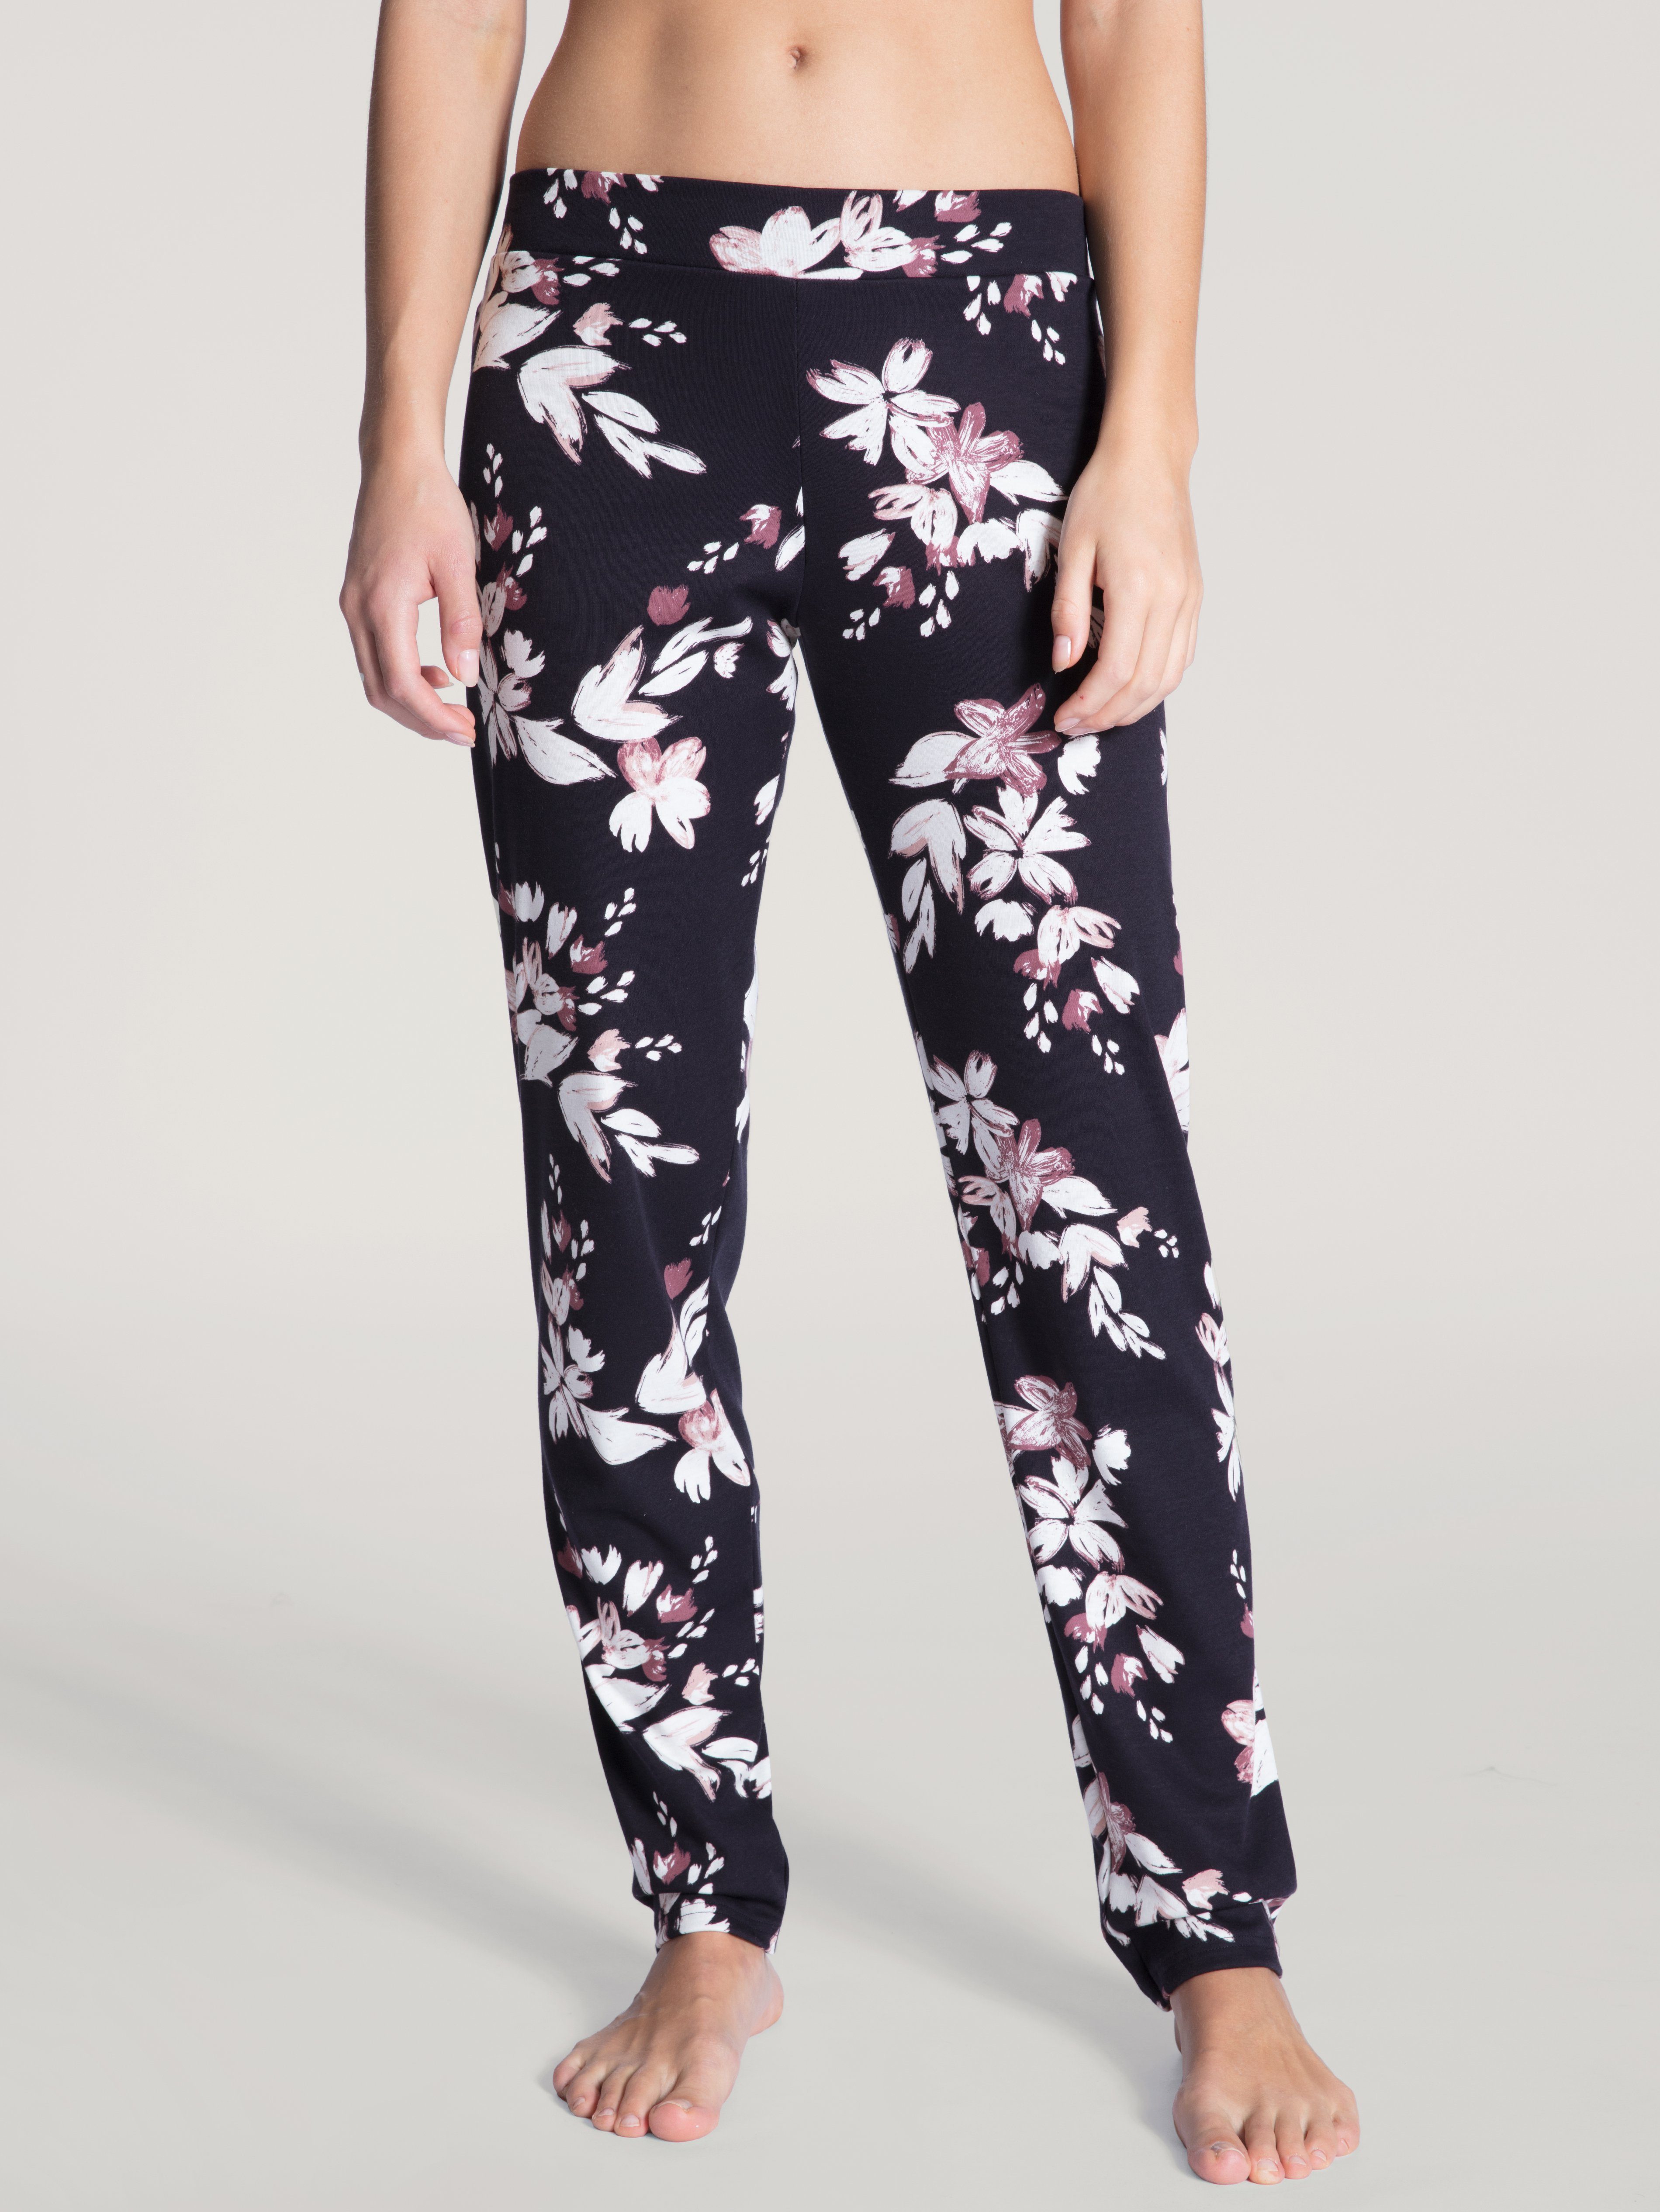 CALIDA Homewearhose Favourites Dreams Loungehose mit floralem Muster, Pants mit Blumendruck